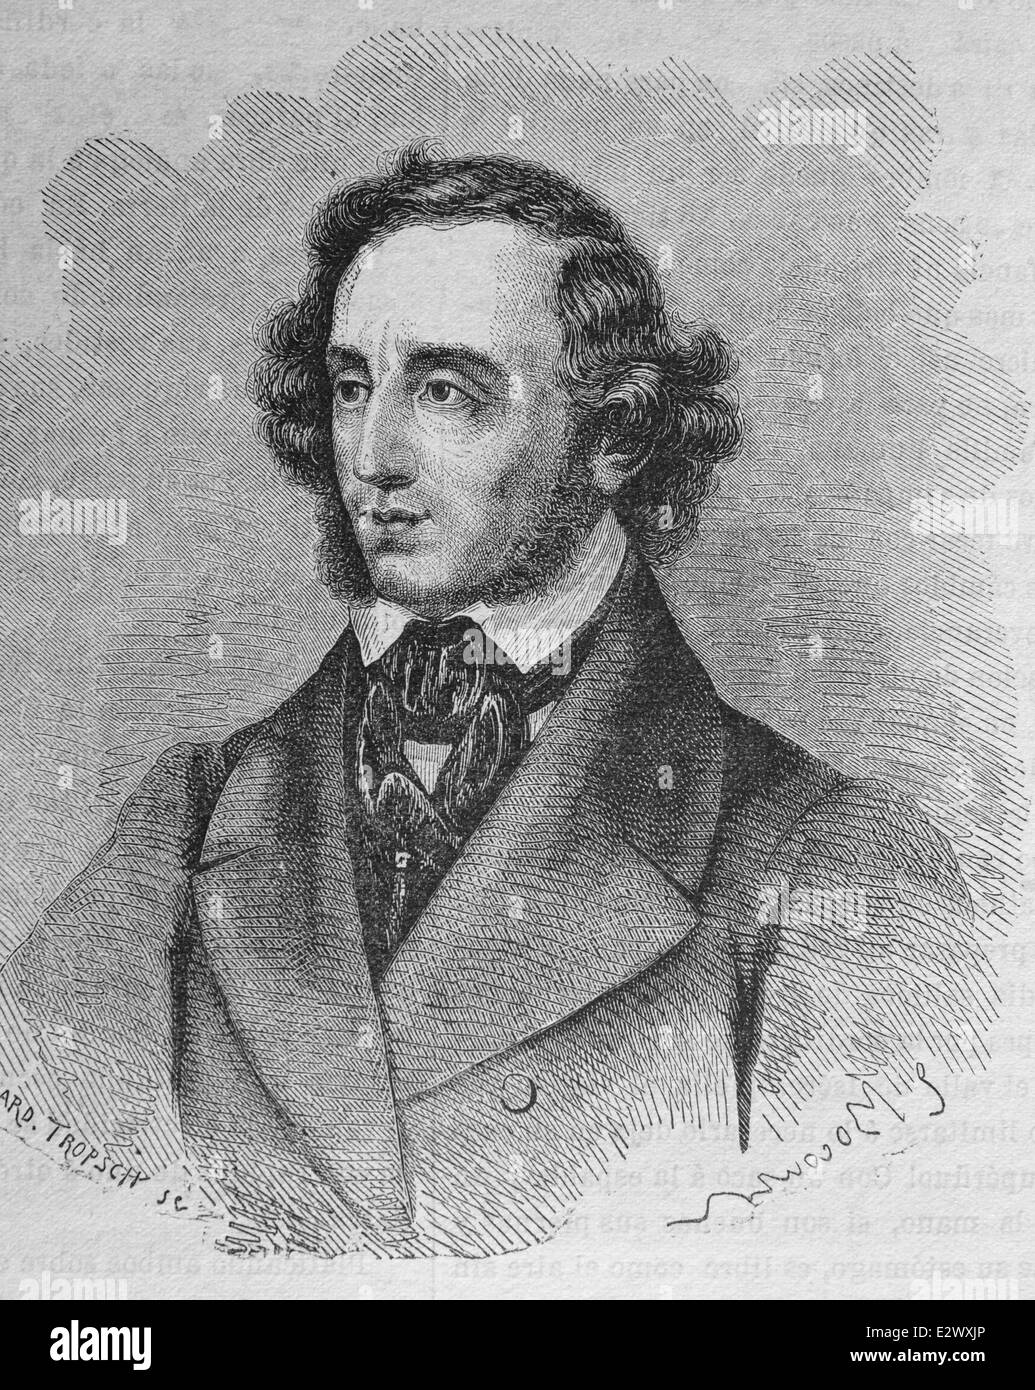 Felix Mendelssohn (1809-1847). German composer, pianist, organist and conductor. Romantic period. Engraving. Stock Photo